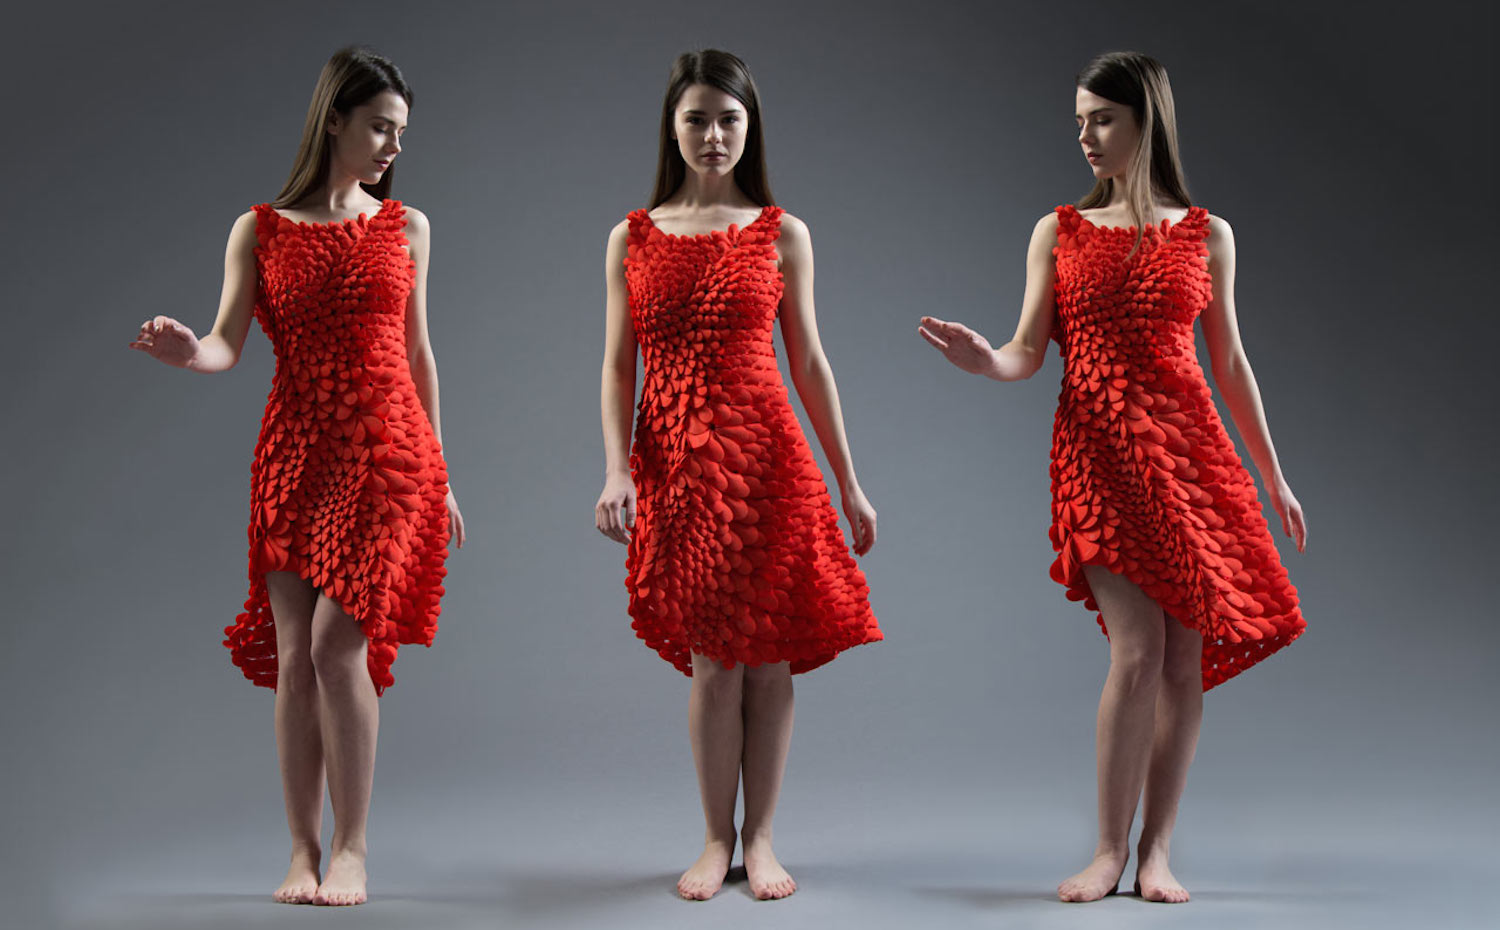 Nervous-System-Kinematics-Petals-Dress-1. Los primeros vestidos salidos de impresoras 3D se abren camino: Nervous System Kinematics Petals Dress